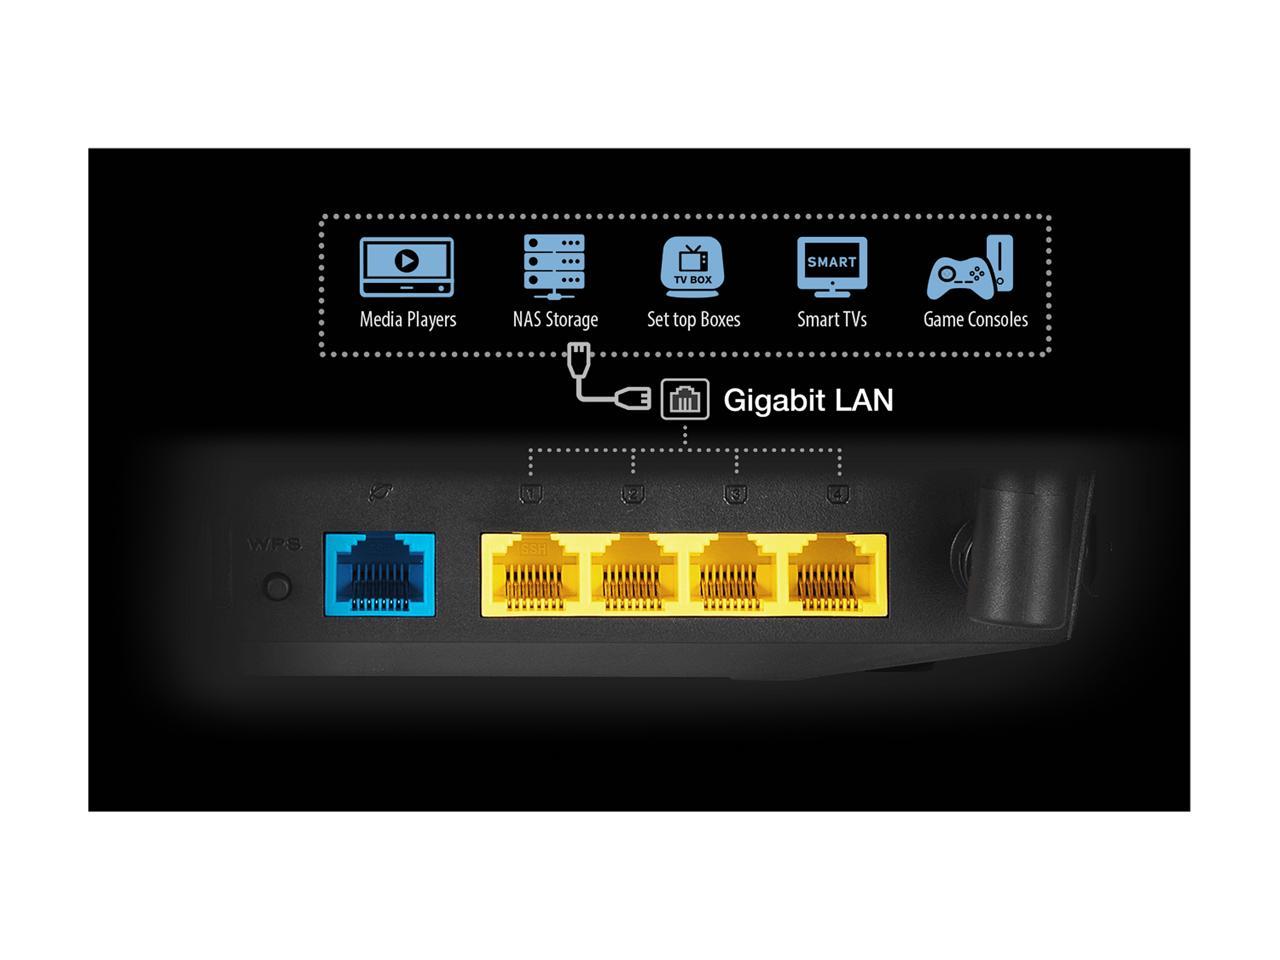 ASUS RT-AC1200 V2 AC1200 Dual Band WiFi Router, Easy 3-step setup, 4 LAN ports, Gaming & Streaming